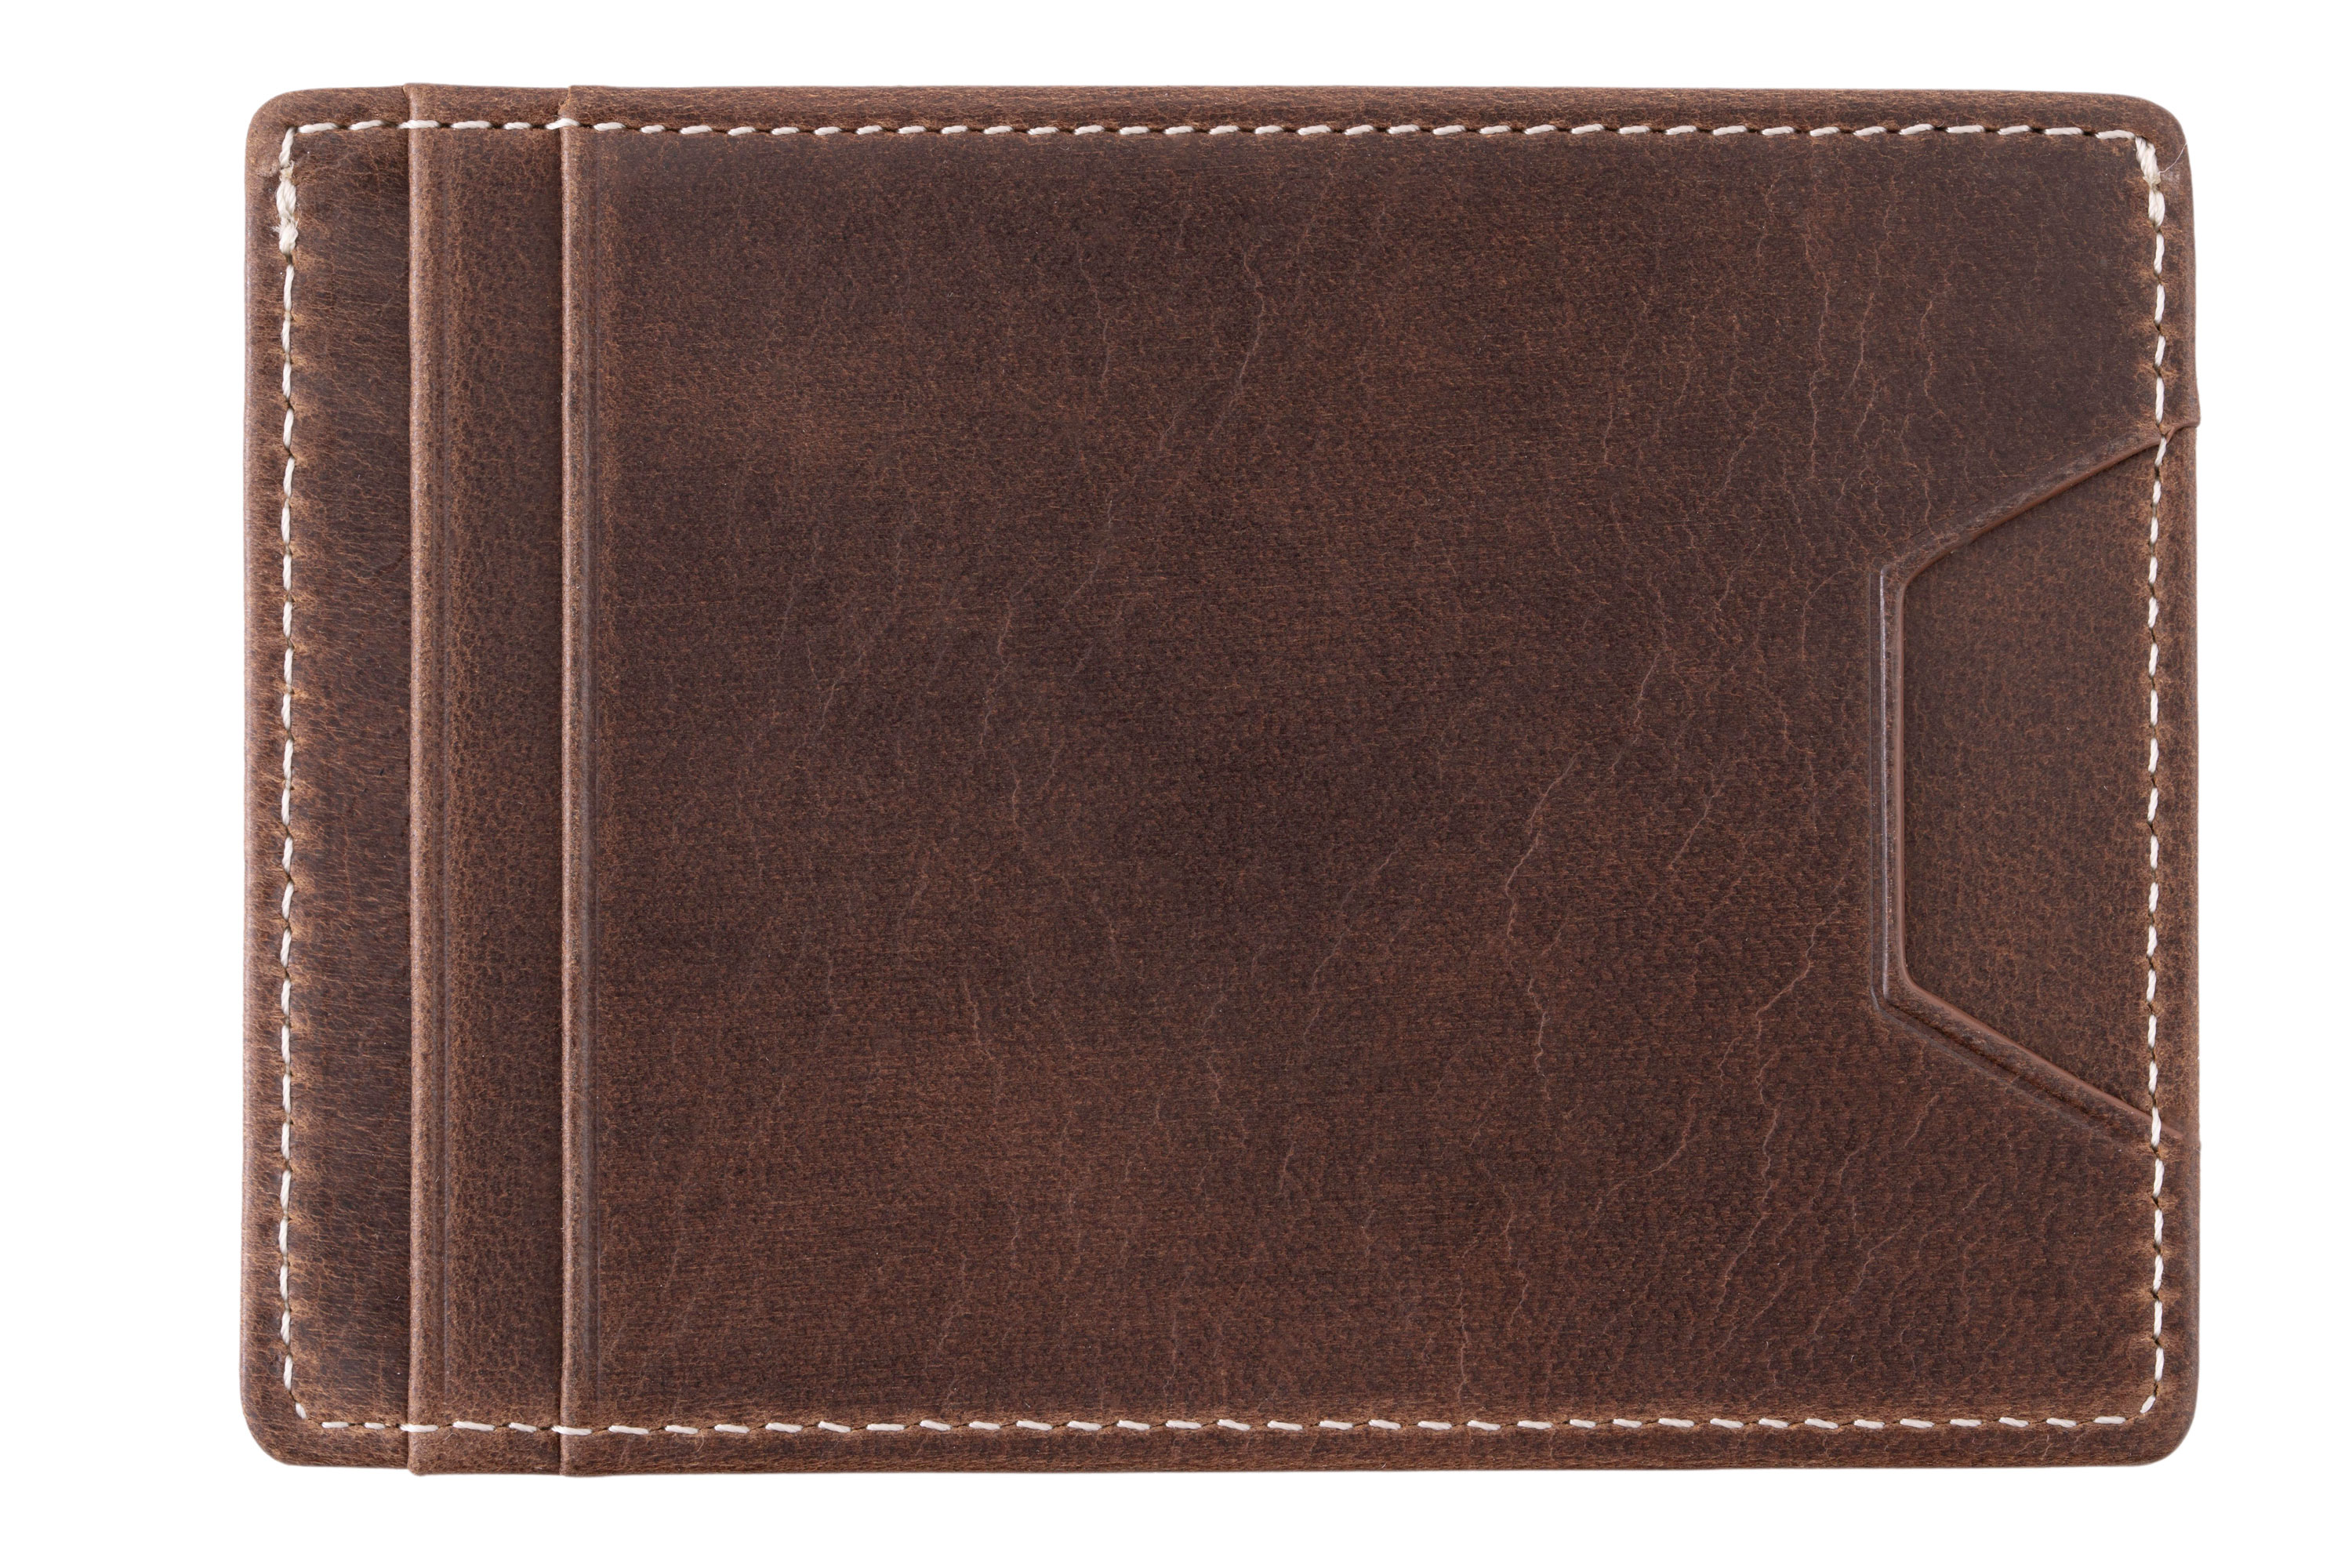 Montecristo Antique Mahogany Full-Grain Leather 4CC Wallet back compartment. 